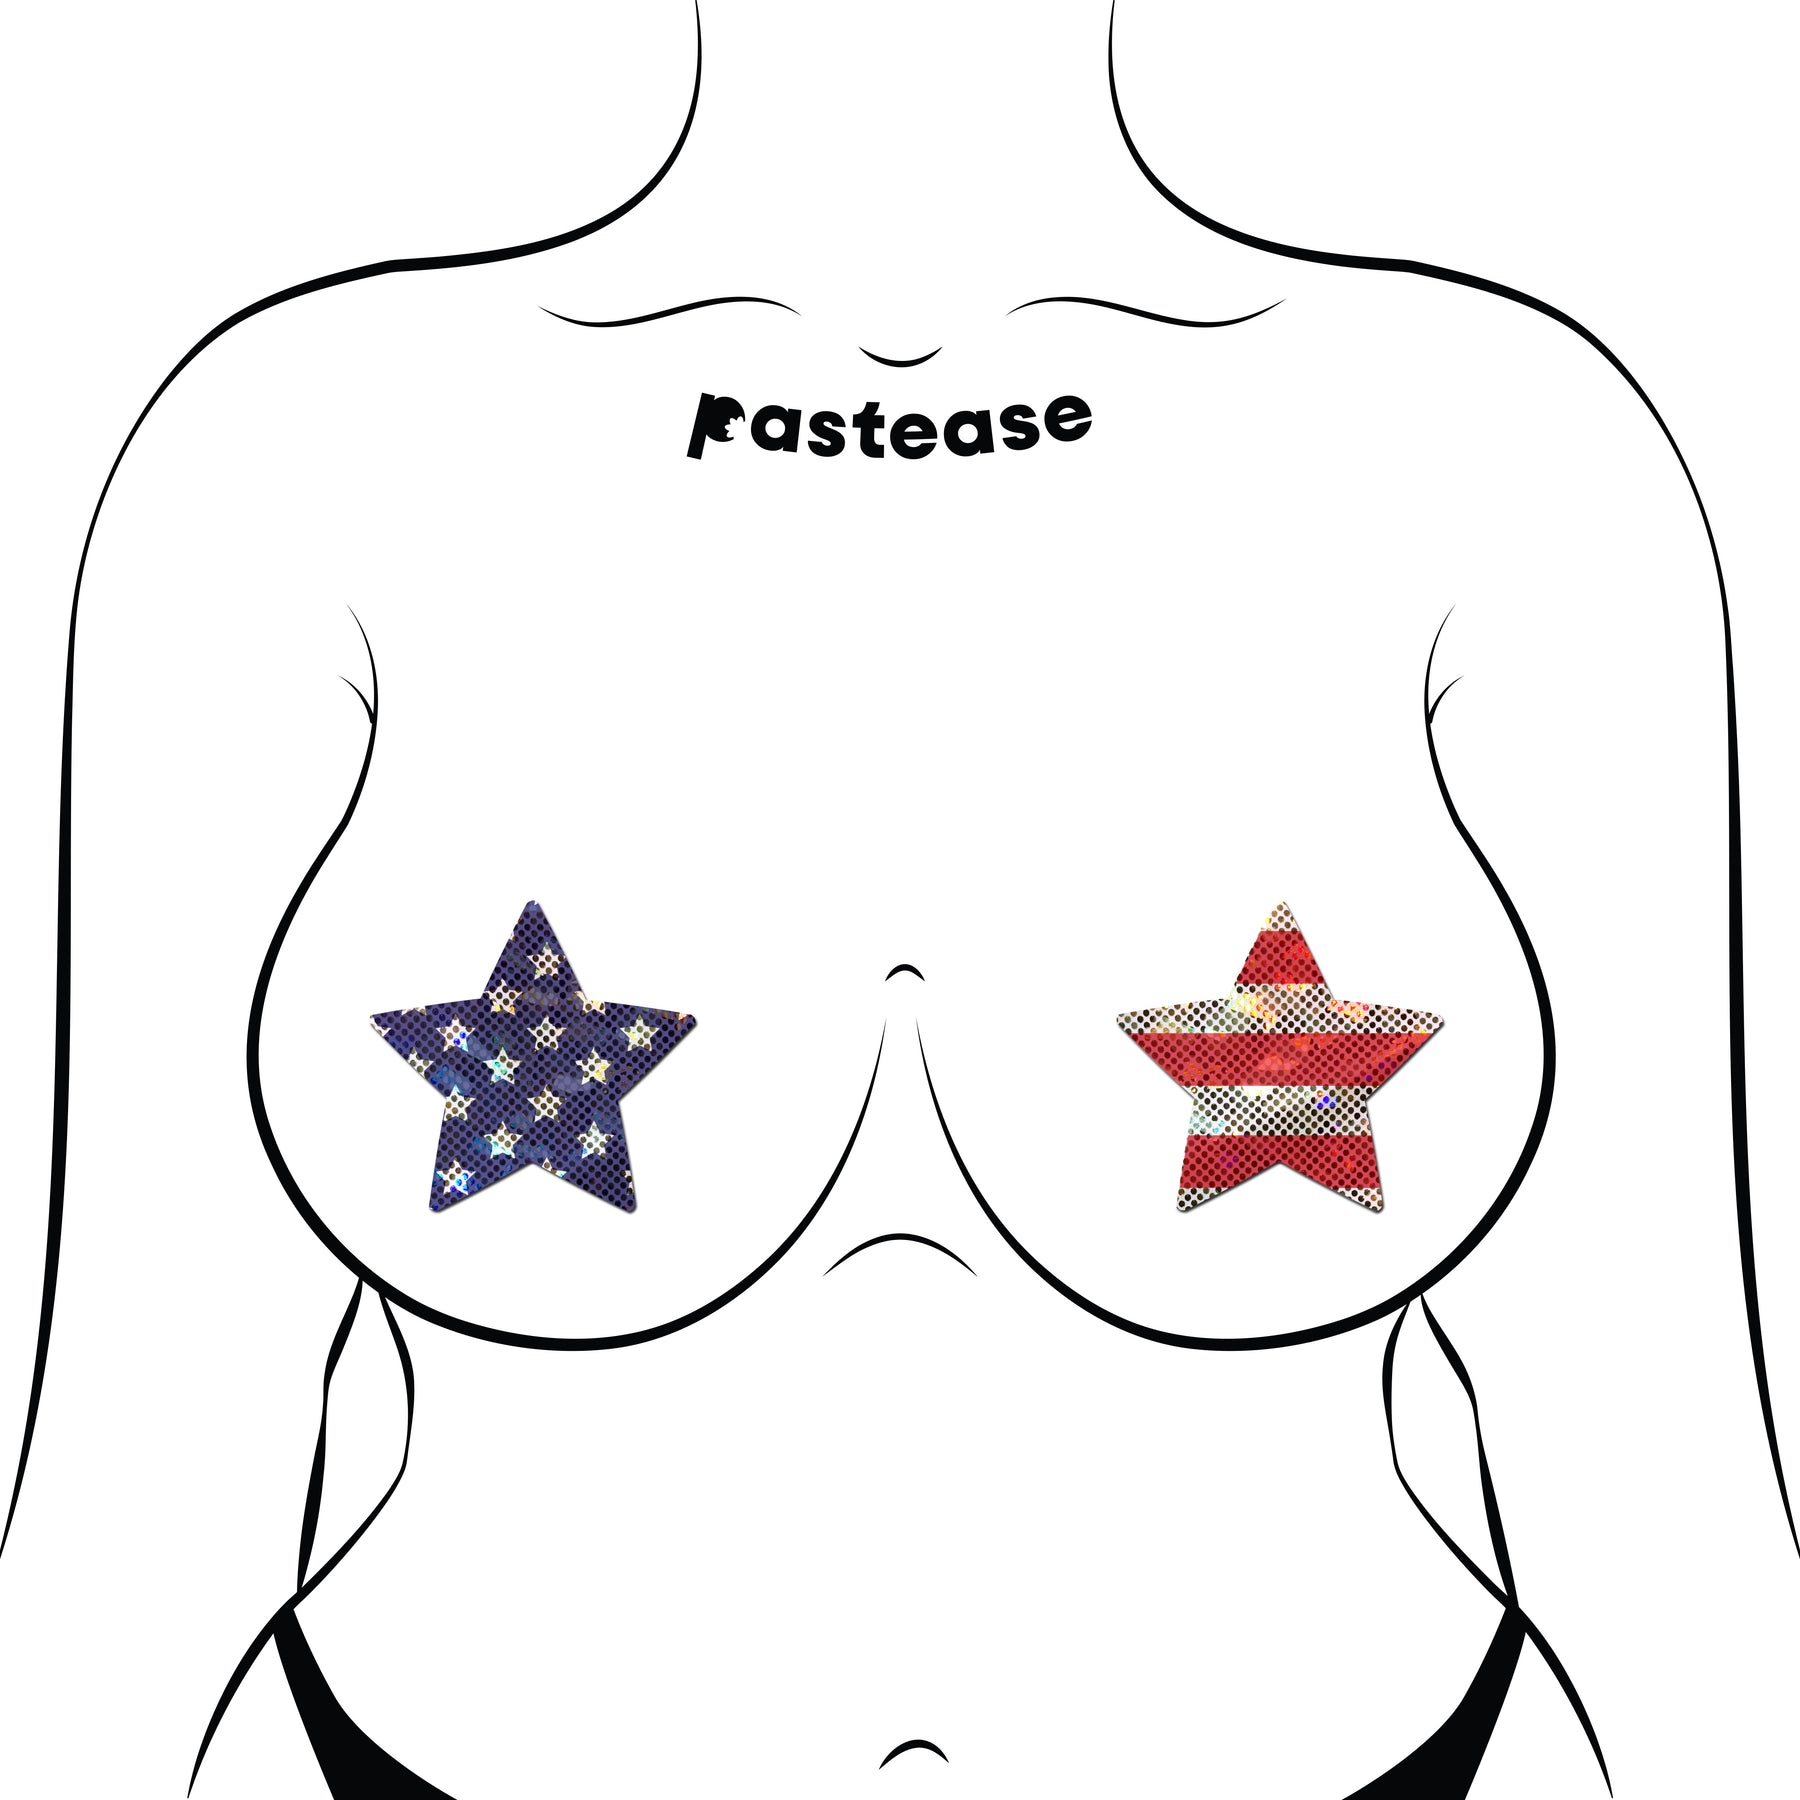 Star: Glittering Stars & Stripes Patriotic Star Nipple Pasties by Pastease®